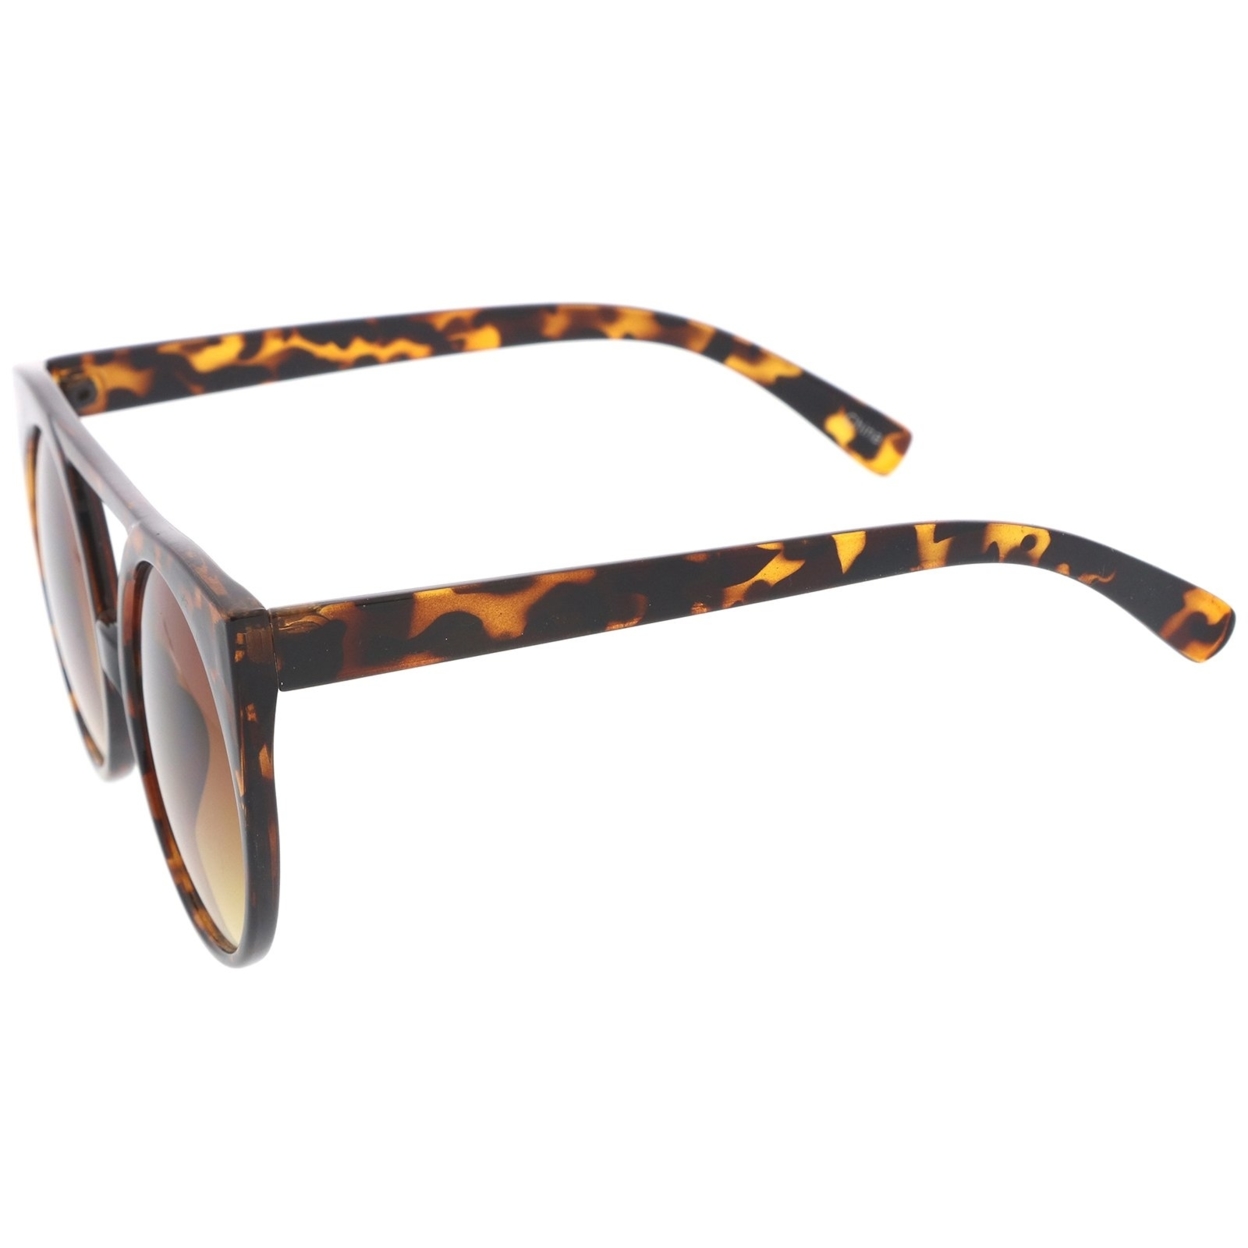 Women's Flat Top Cutout Round Lens Oversize Cat Eye Sunglasses 52mm - Brown-Tortoise / Grey Gradient